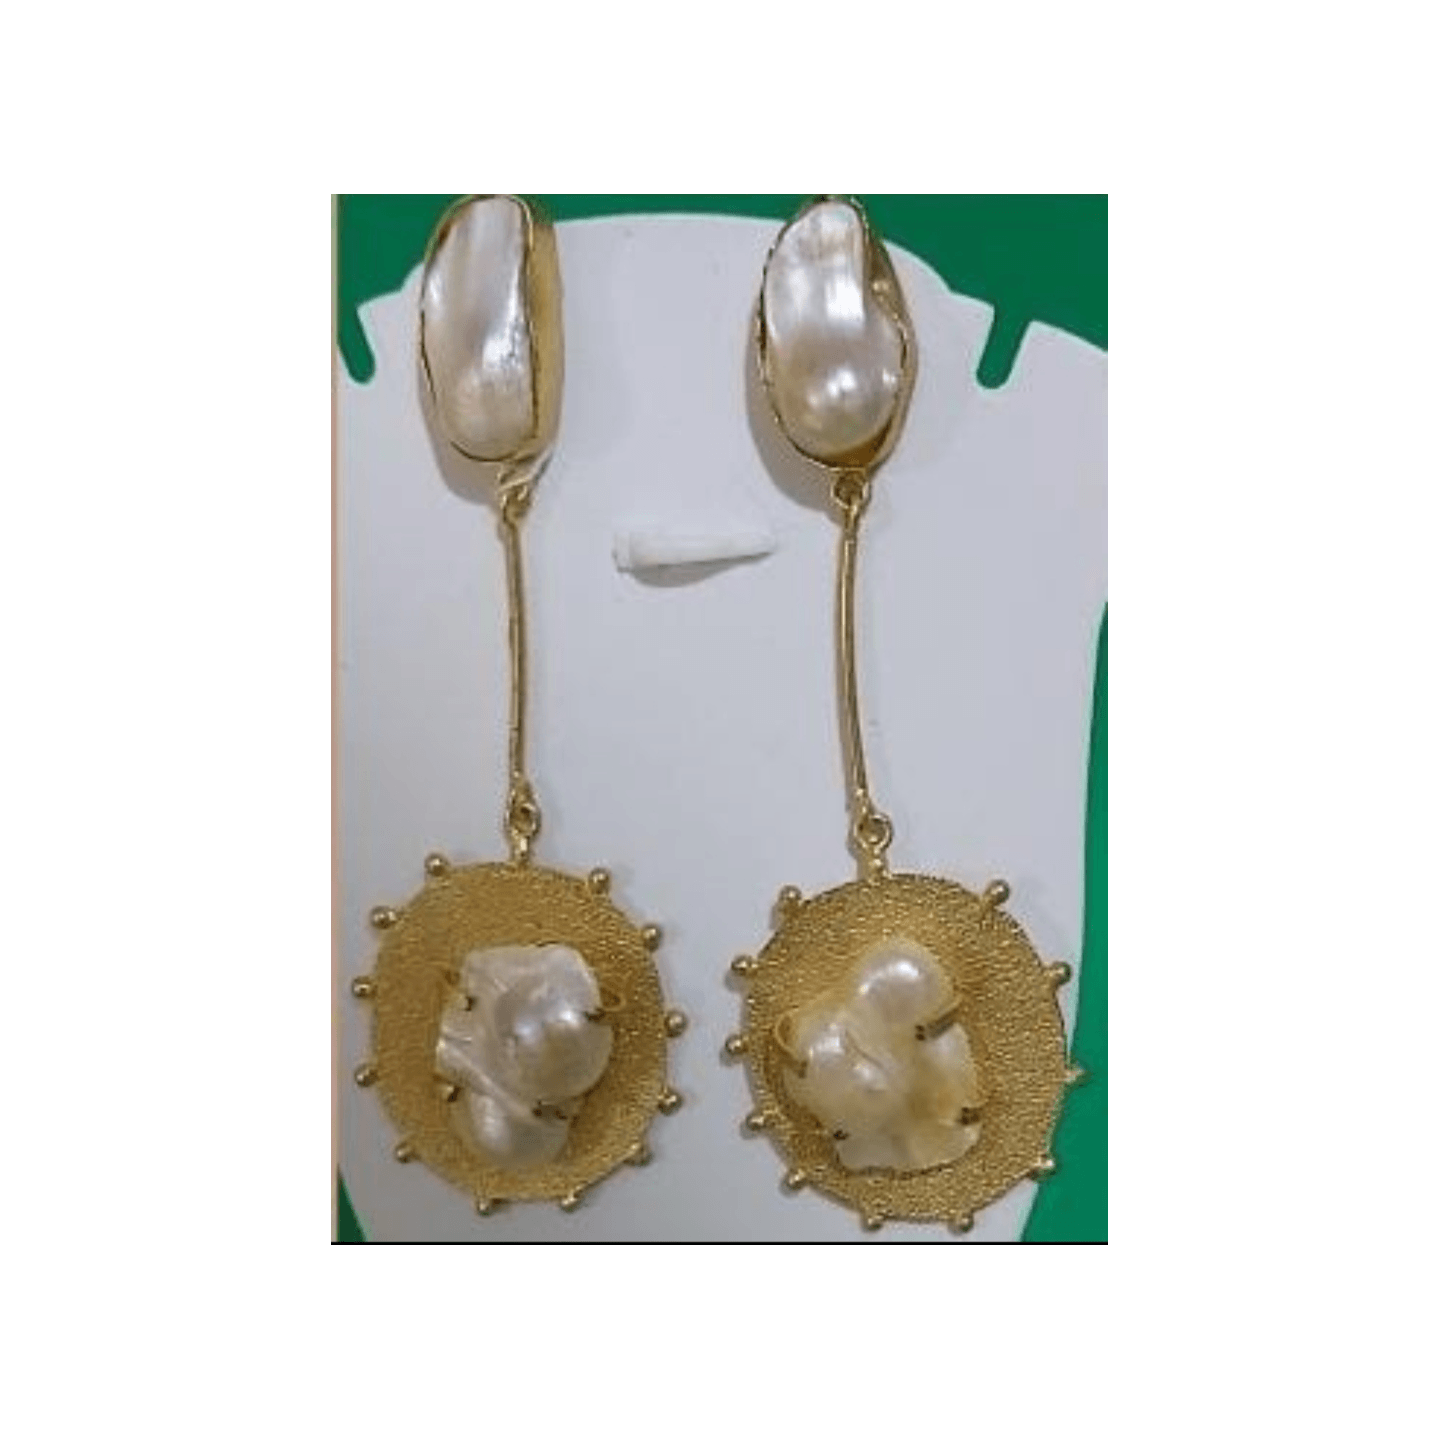 Long Baroque Pearl Earrings